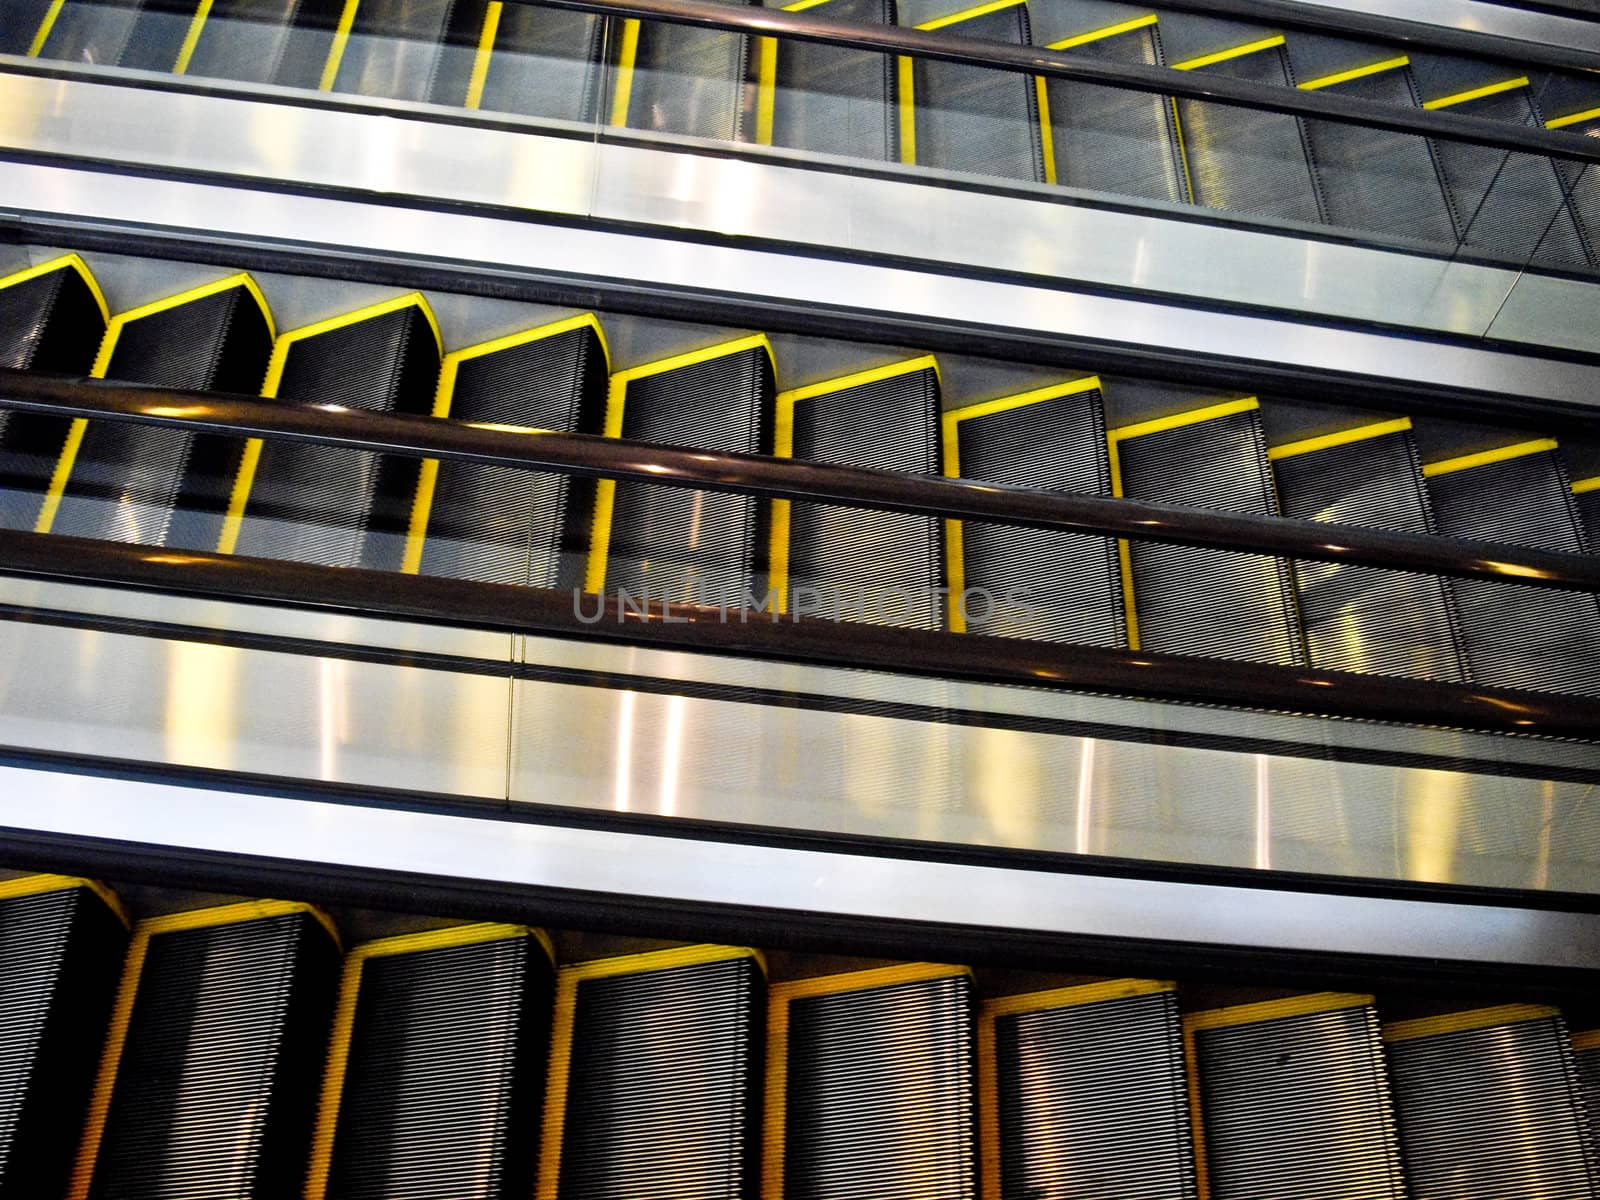 Three moving escalators with no people